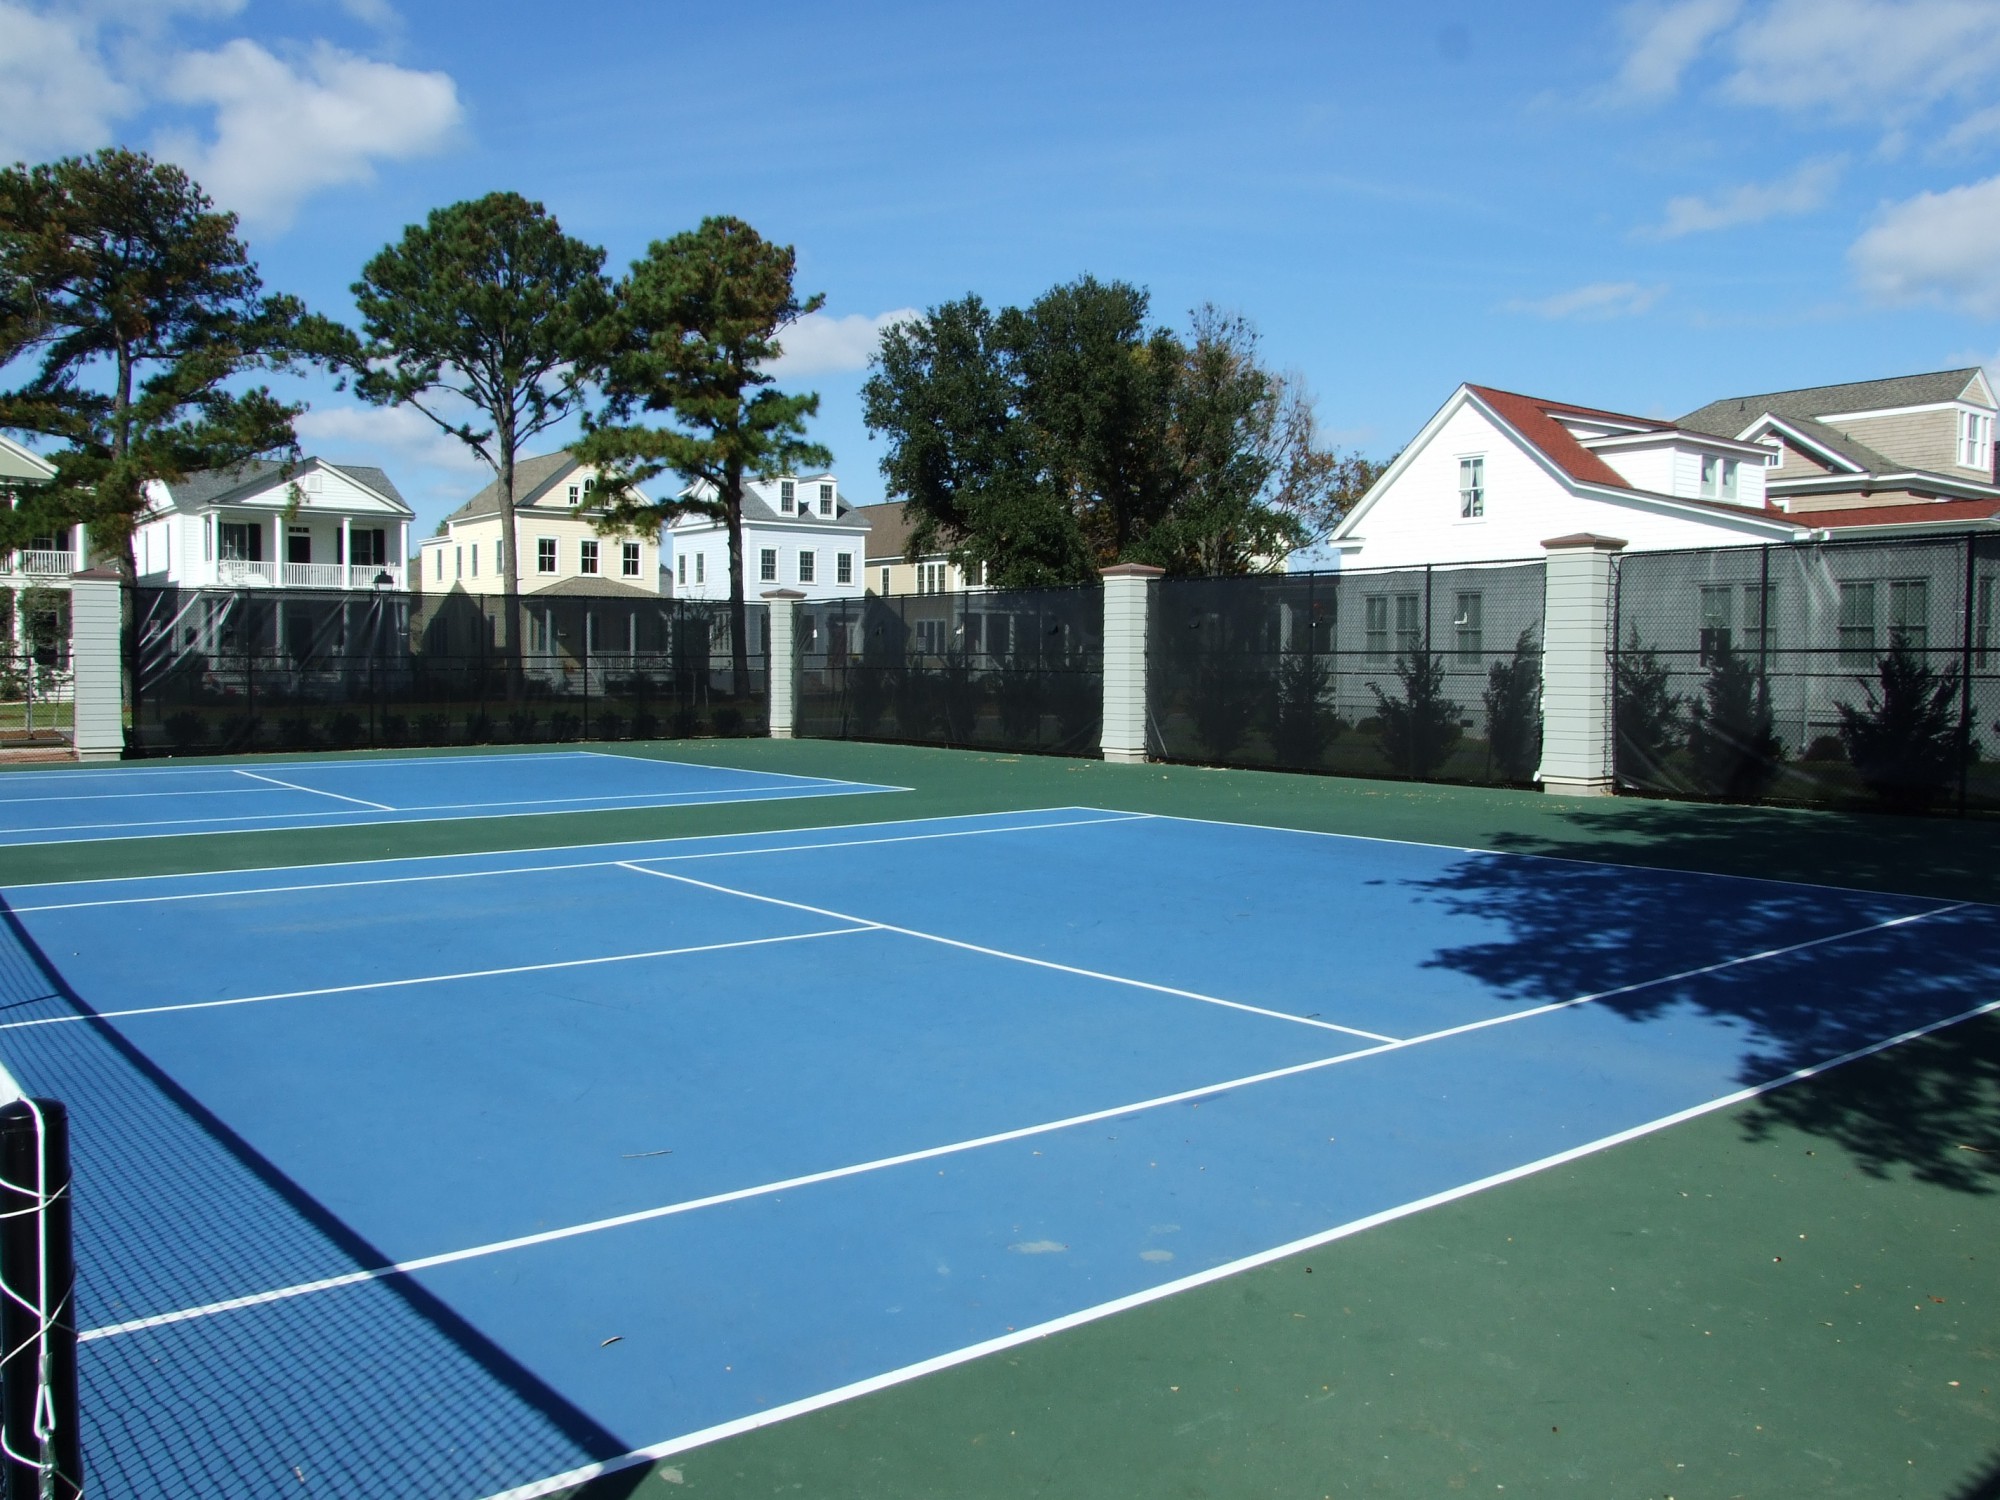 amenity tennis court